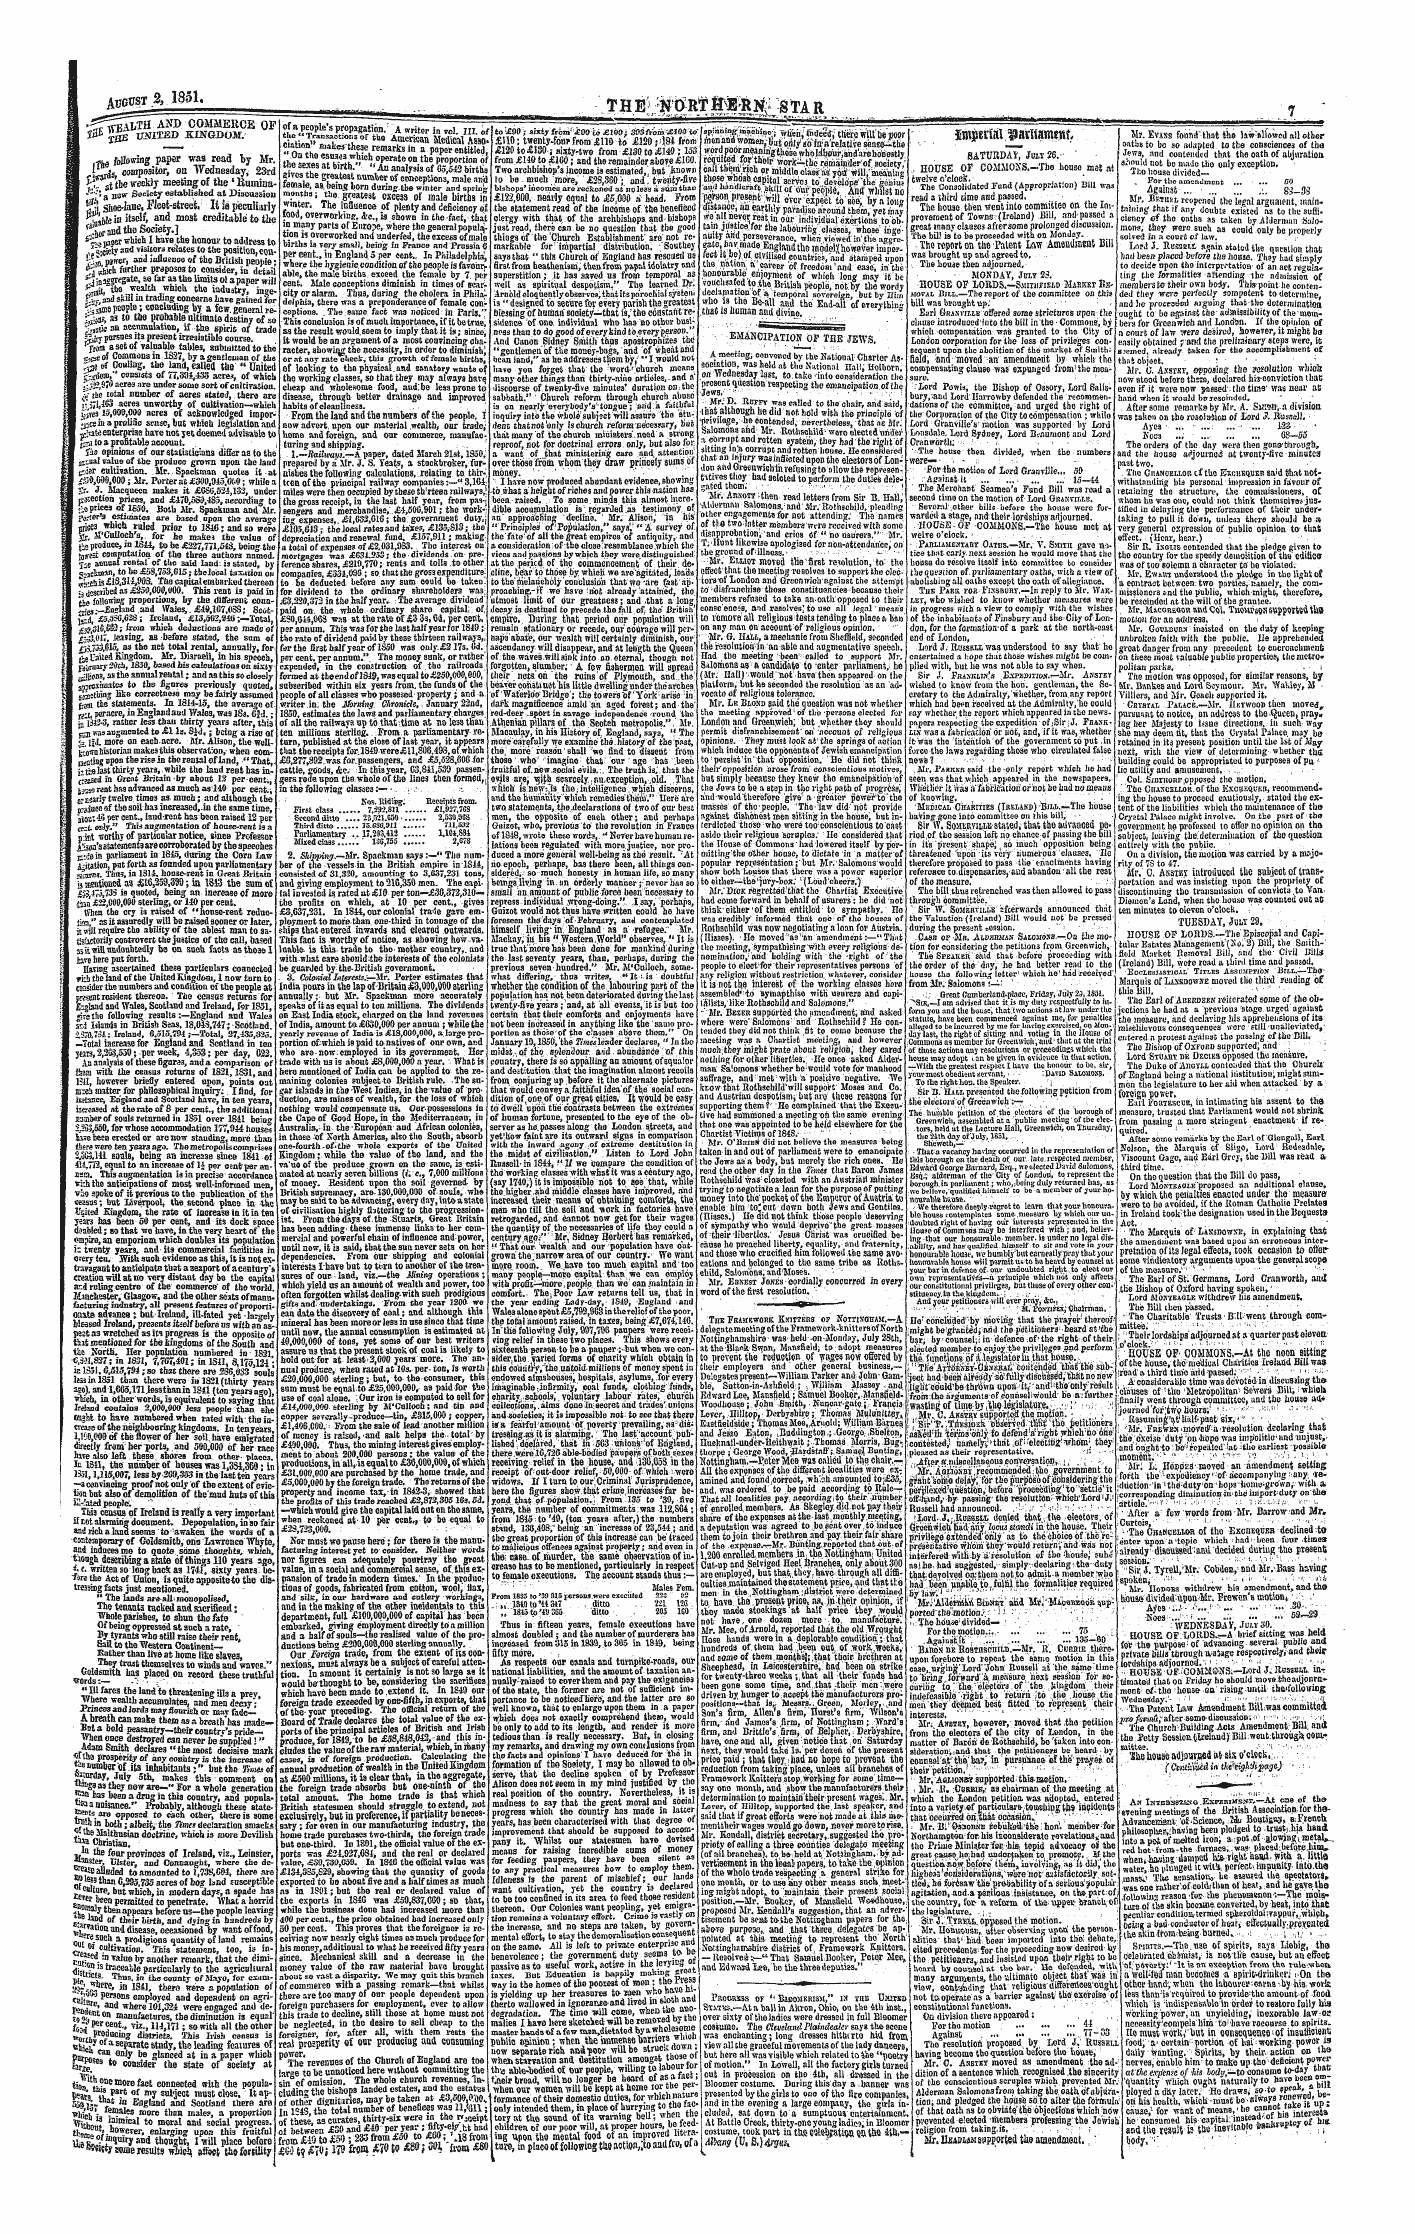 Northern Star (1837-1852): jS F Y, 1st edition - $Mpeiiai ^Atitamrwt